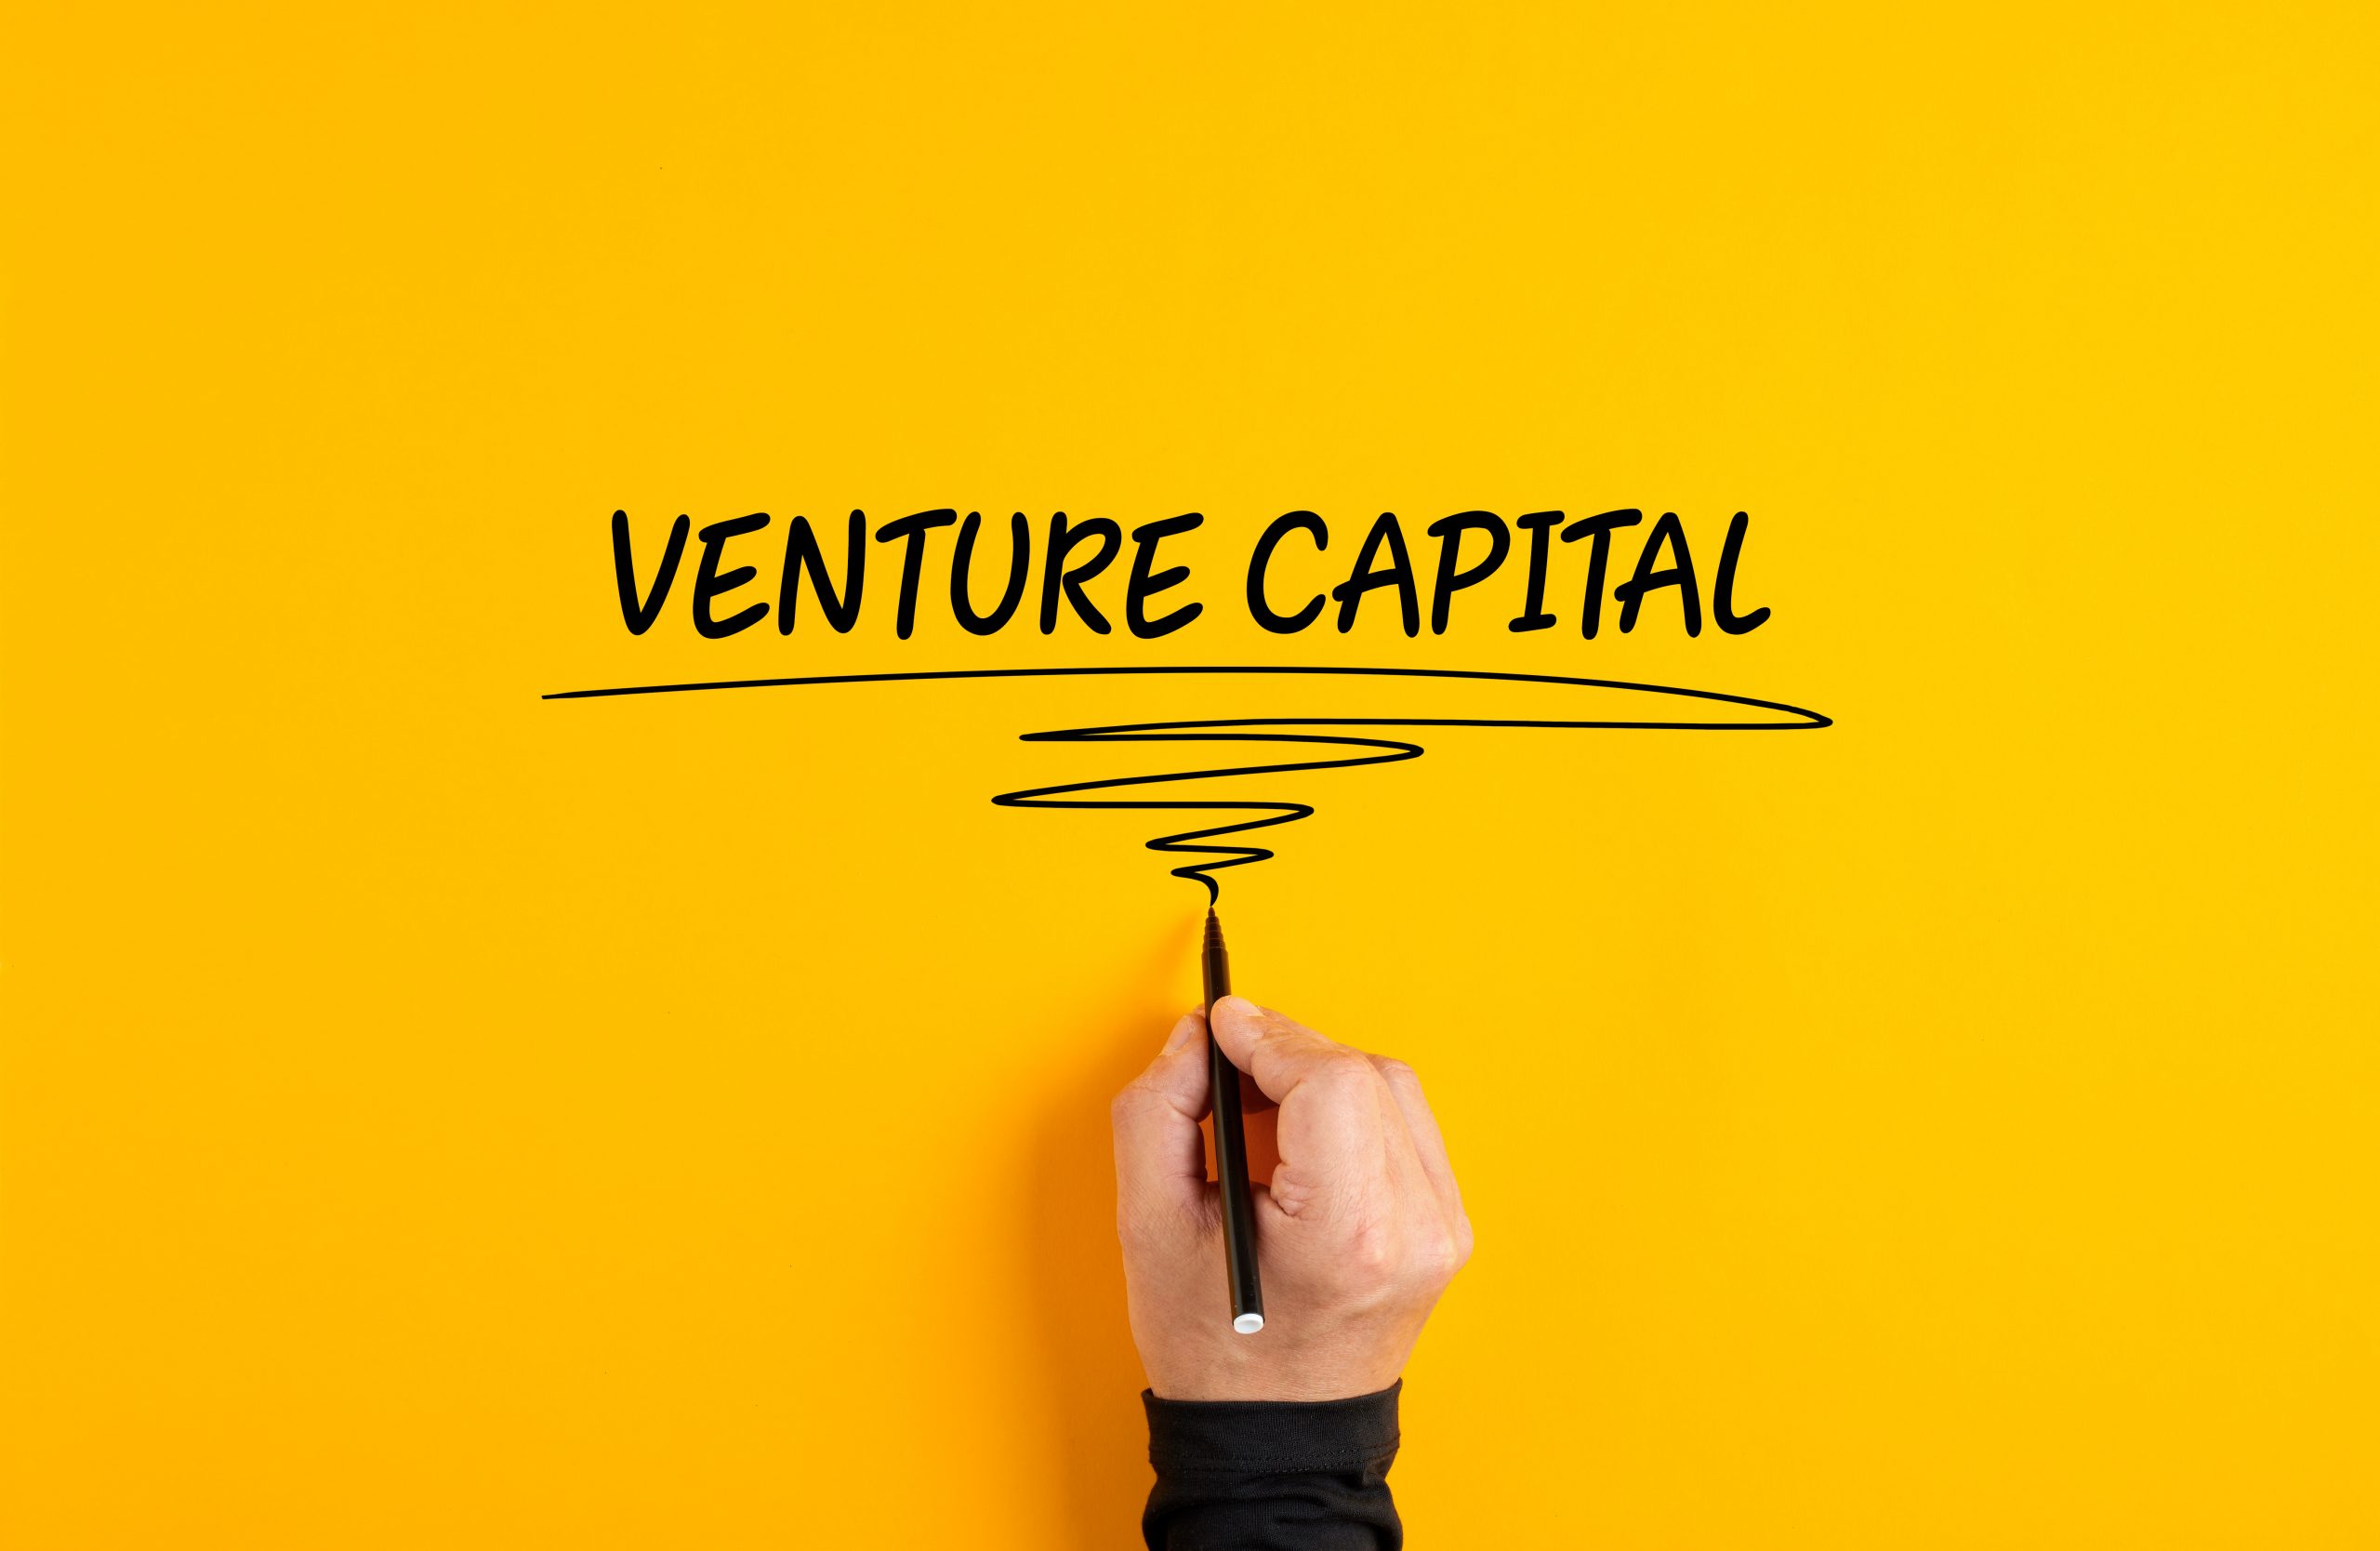 Is venture capital the best asset class?